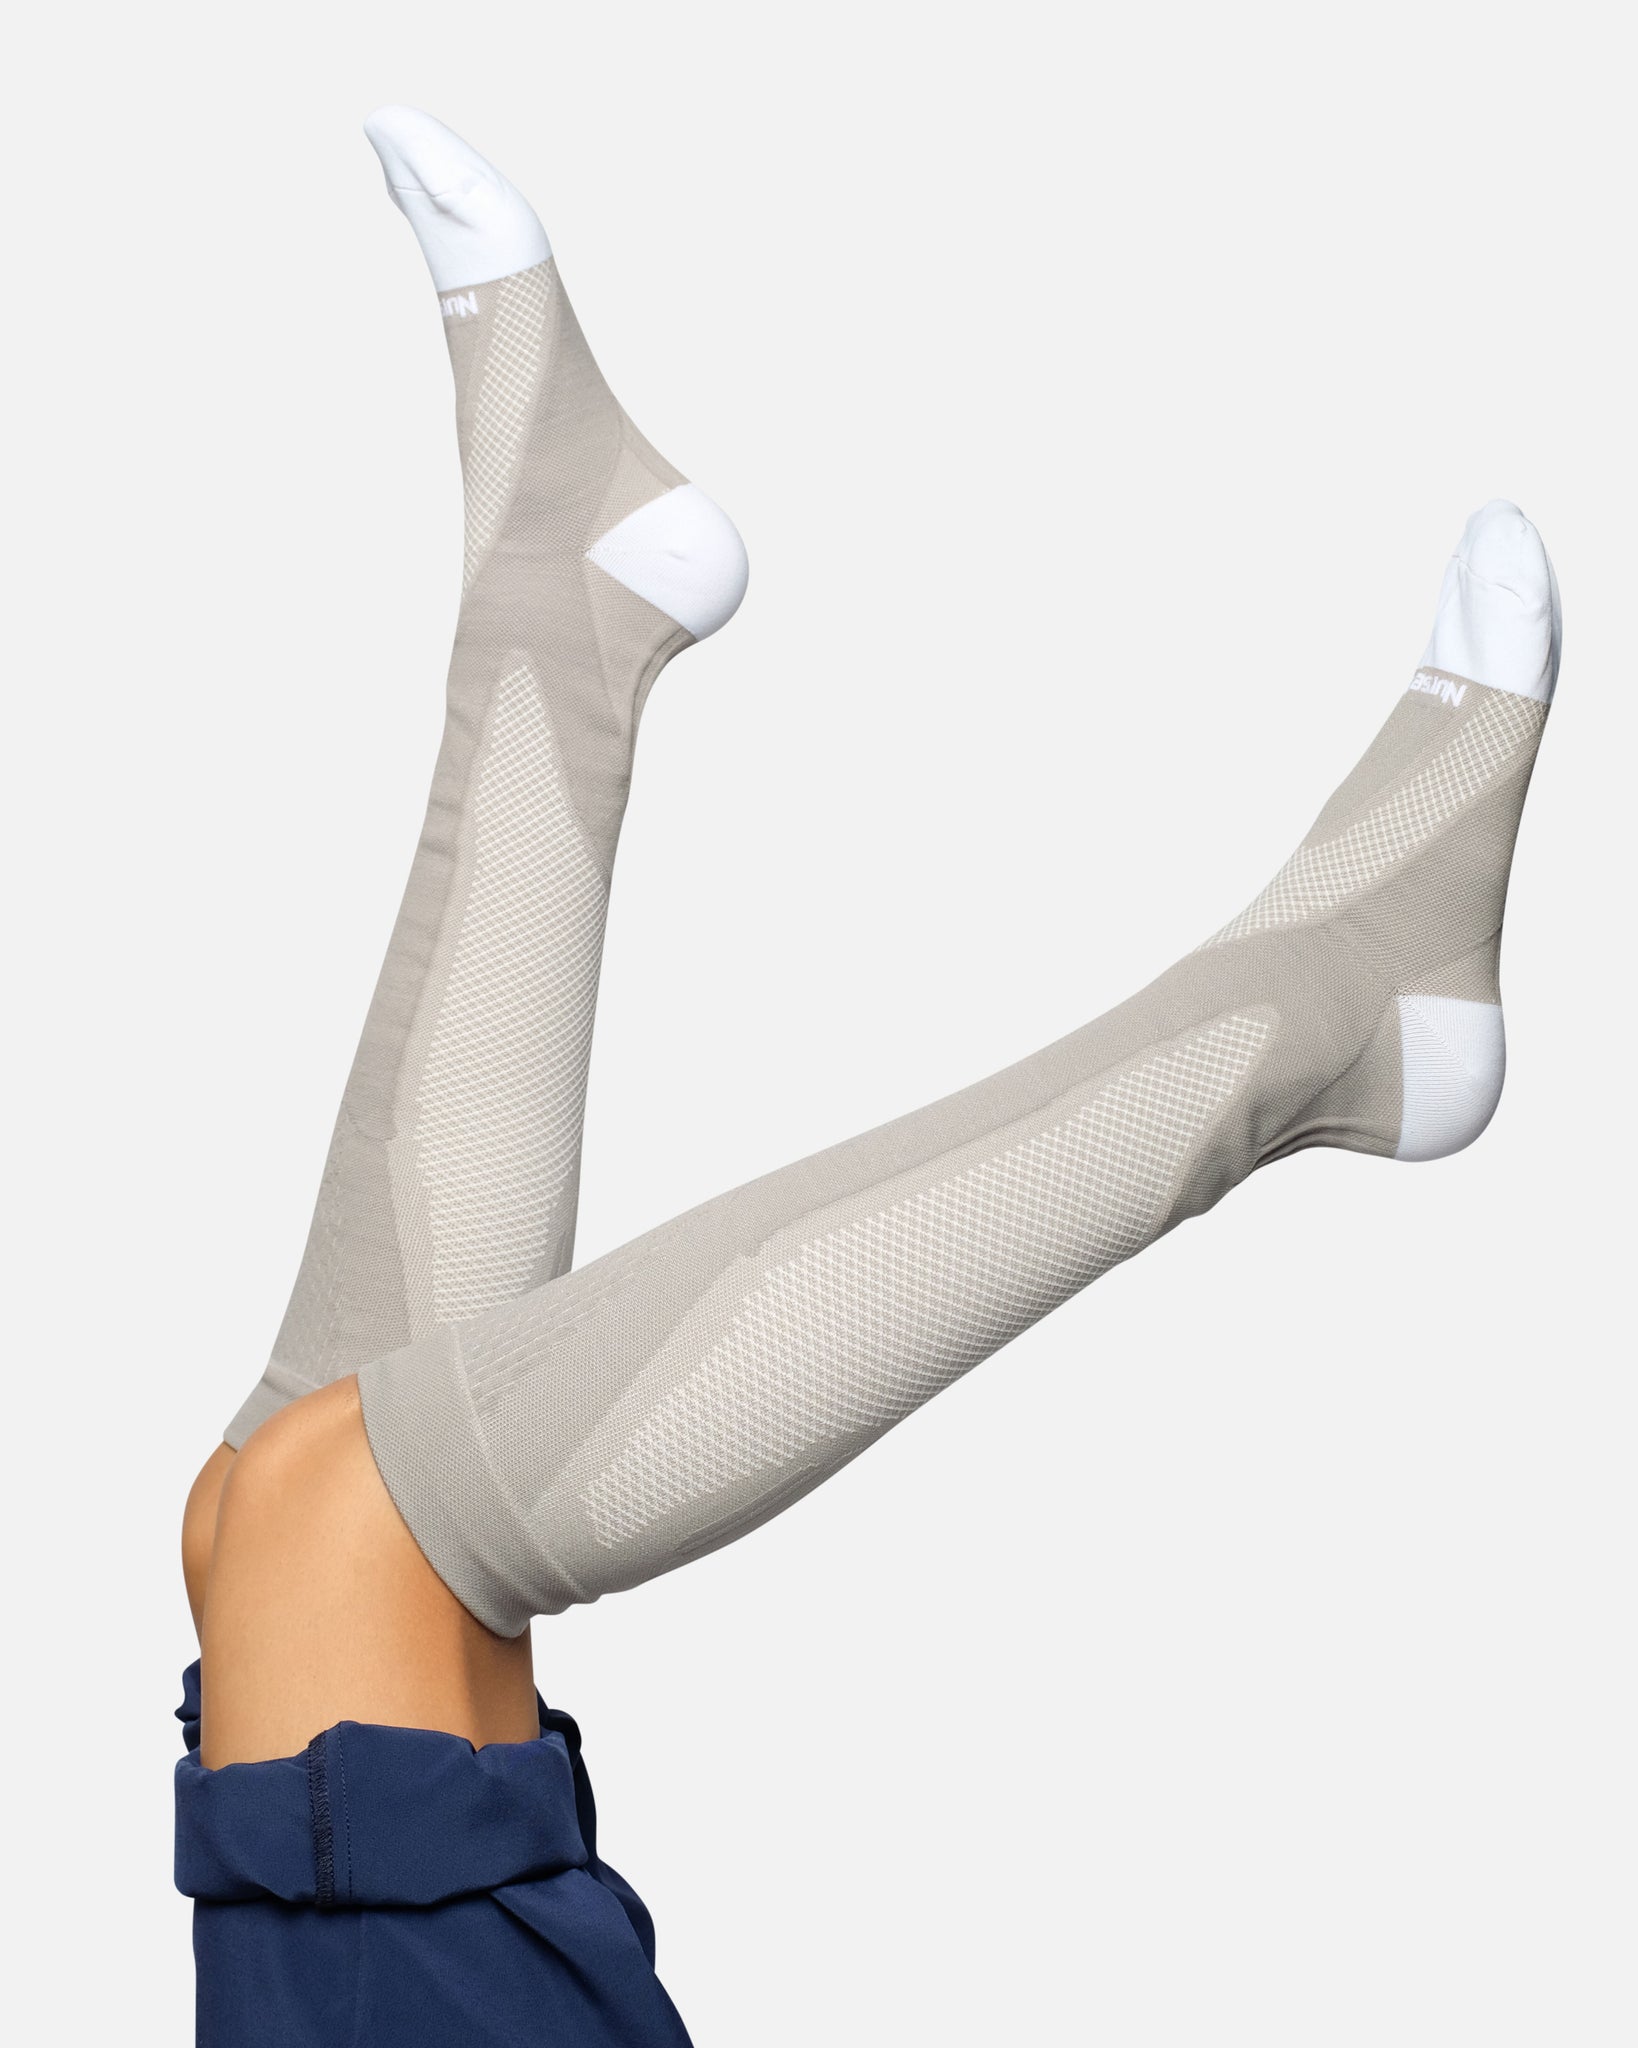 Compression Socks for Dancers  3,000 5 Star Reviews – Nurse Yard